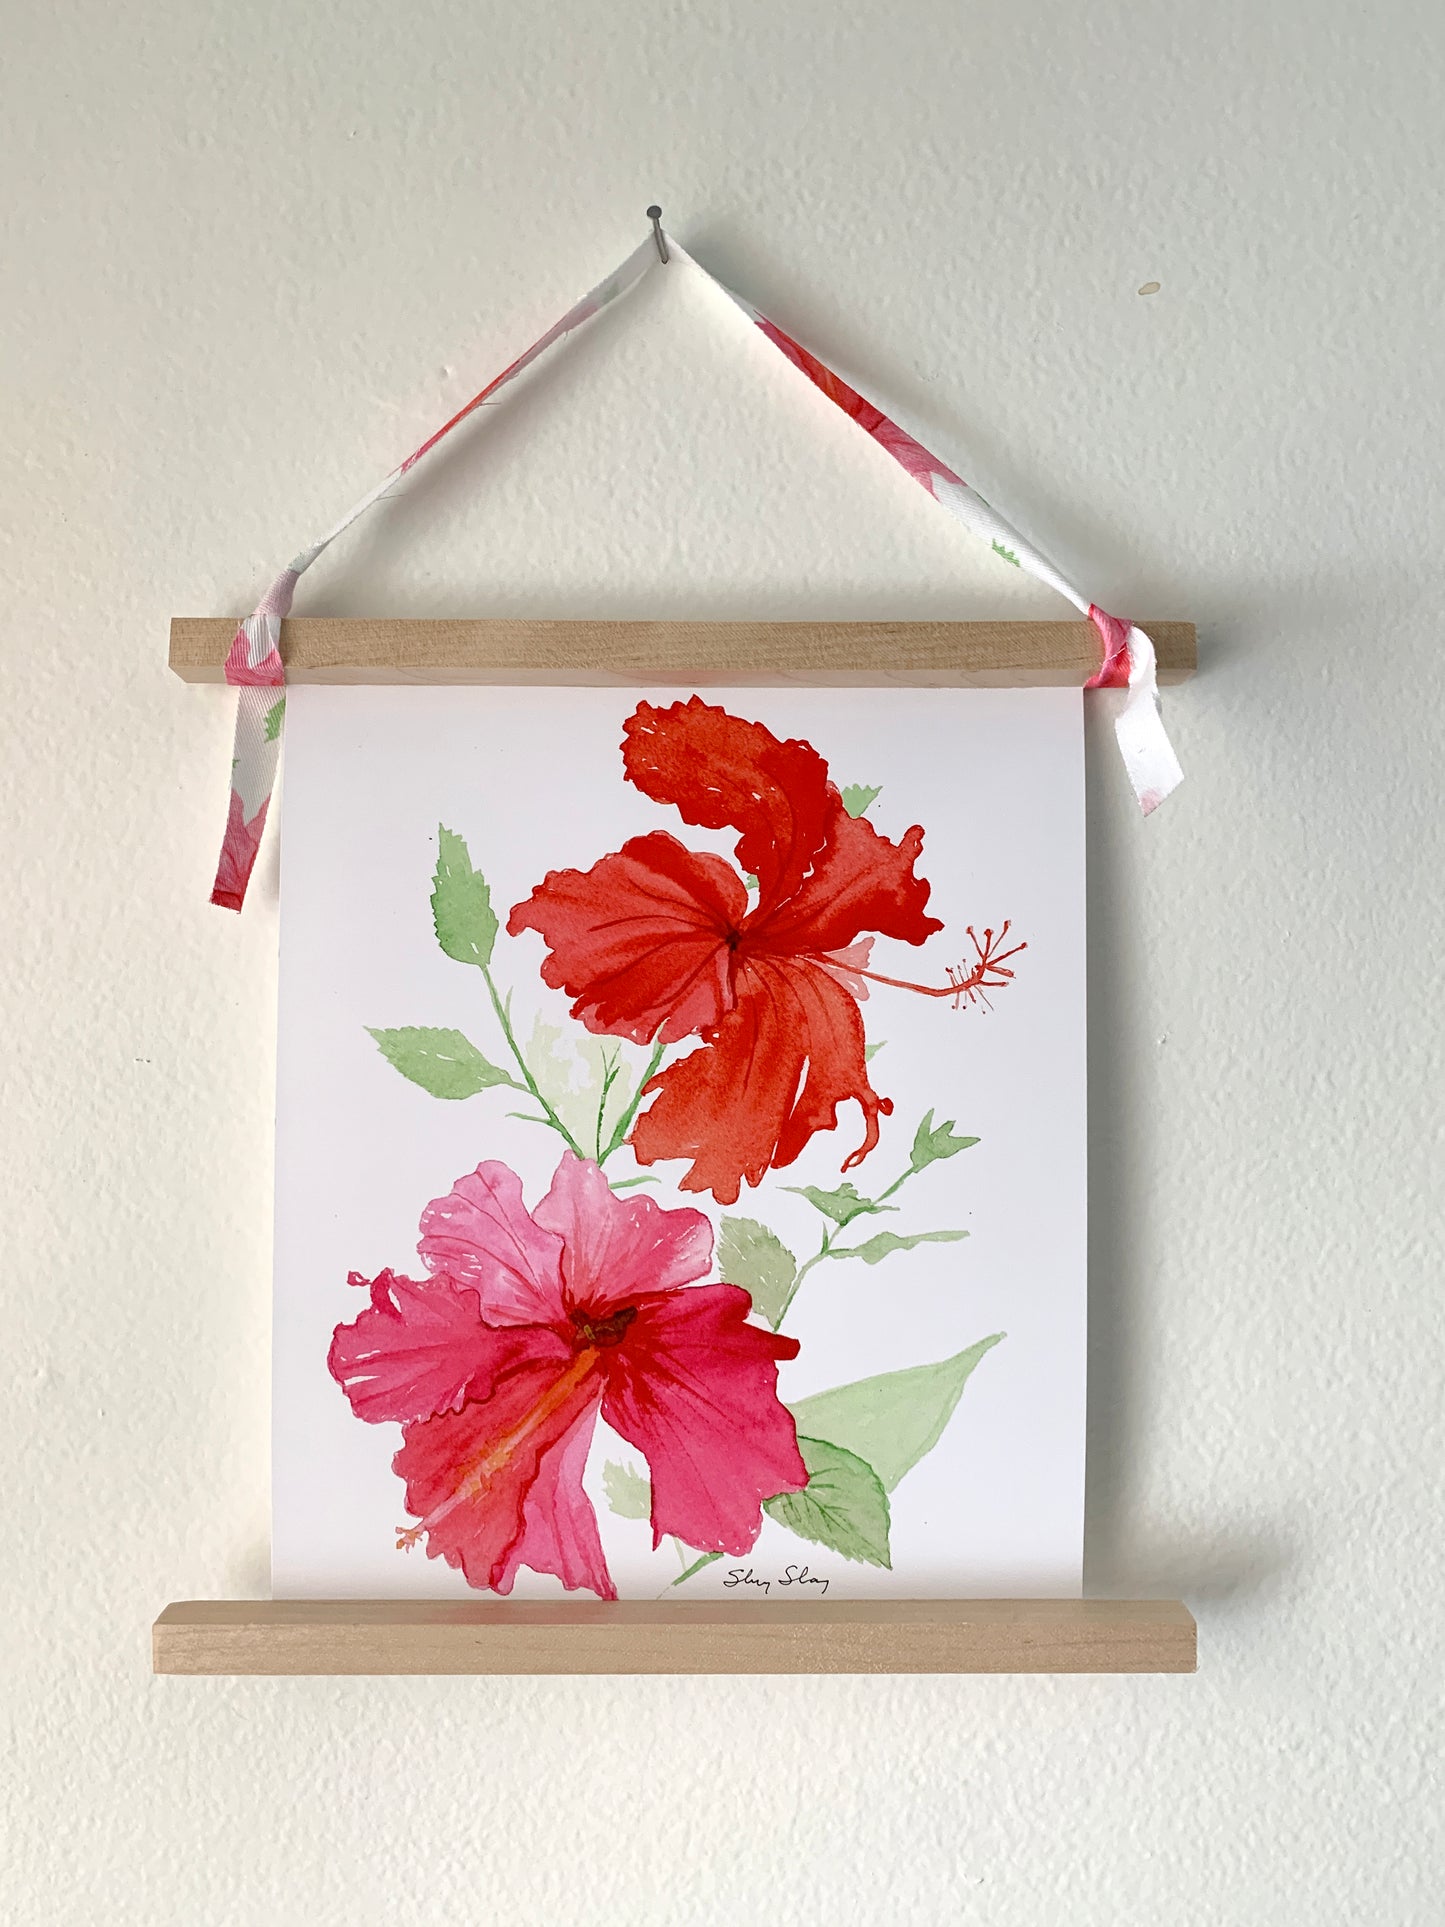 Hanging Print - Flamingo Shores - Original Art for Home Decor and Gifts